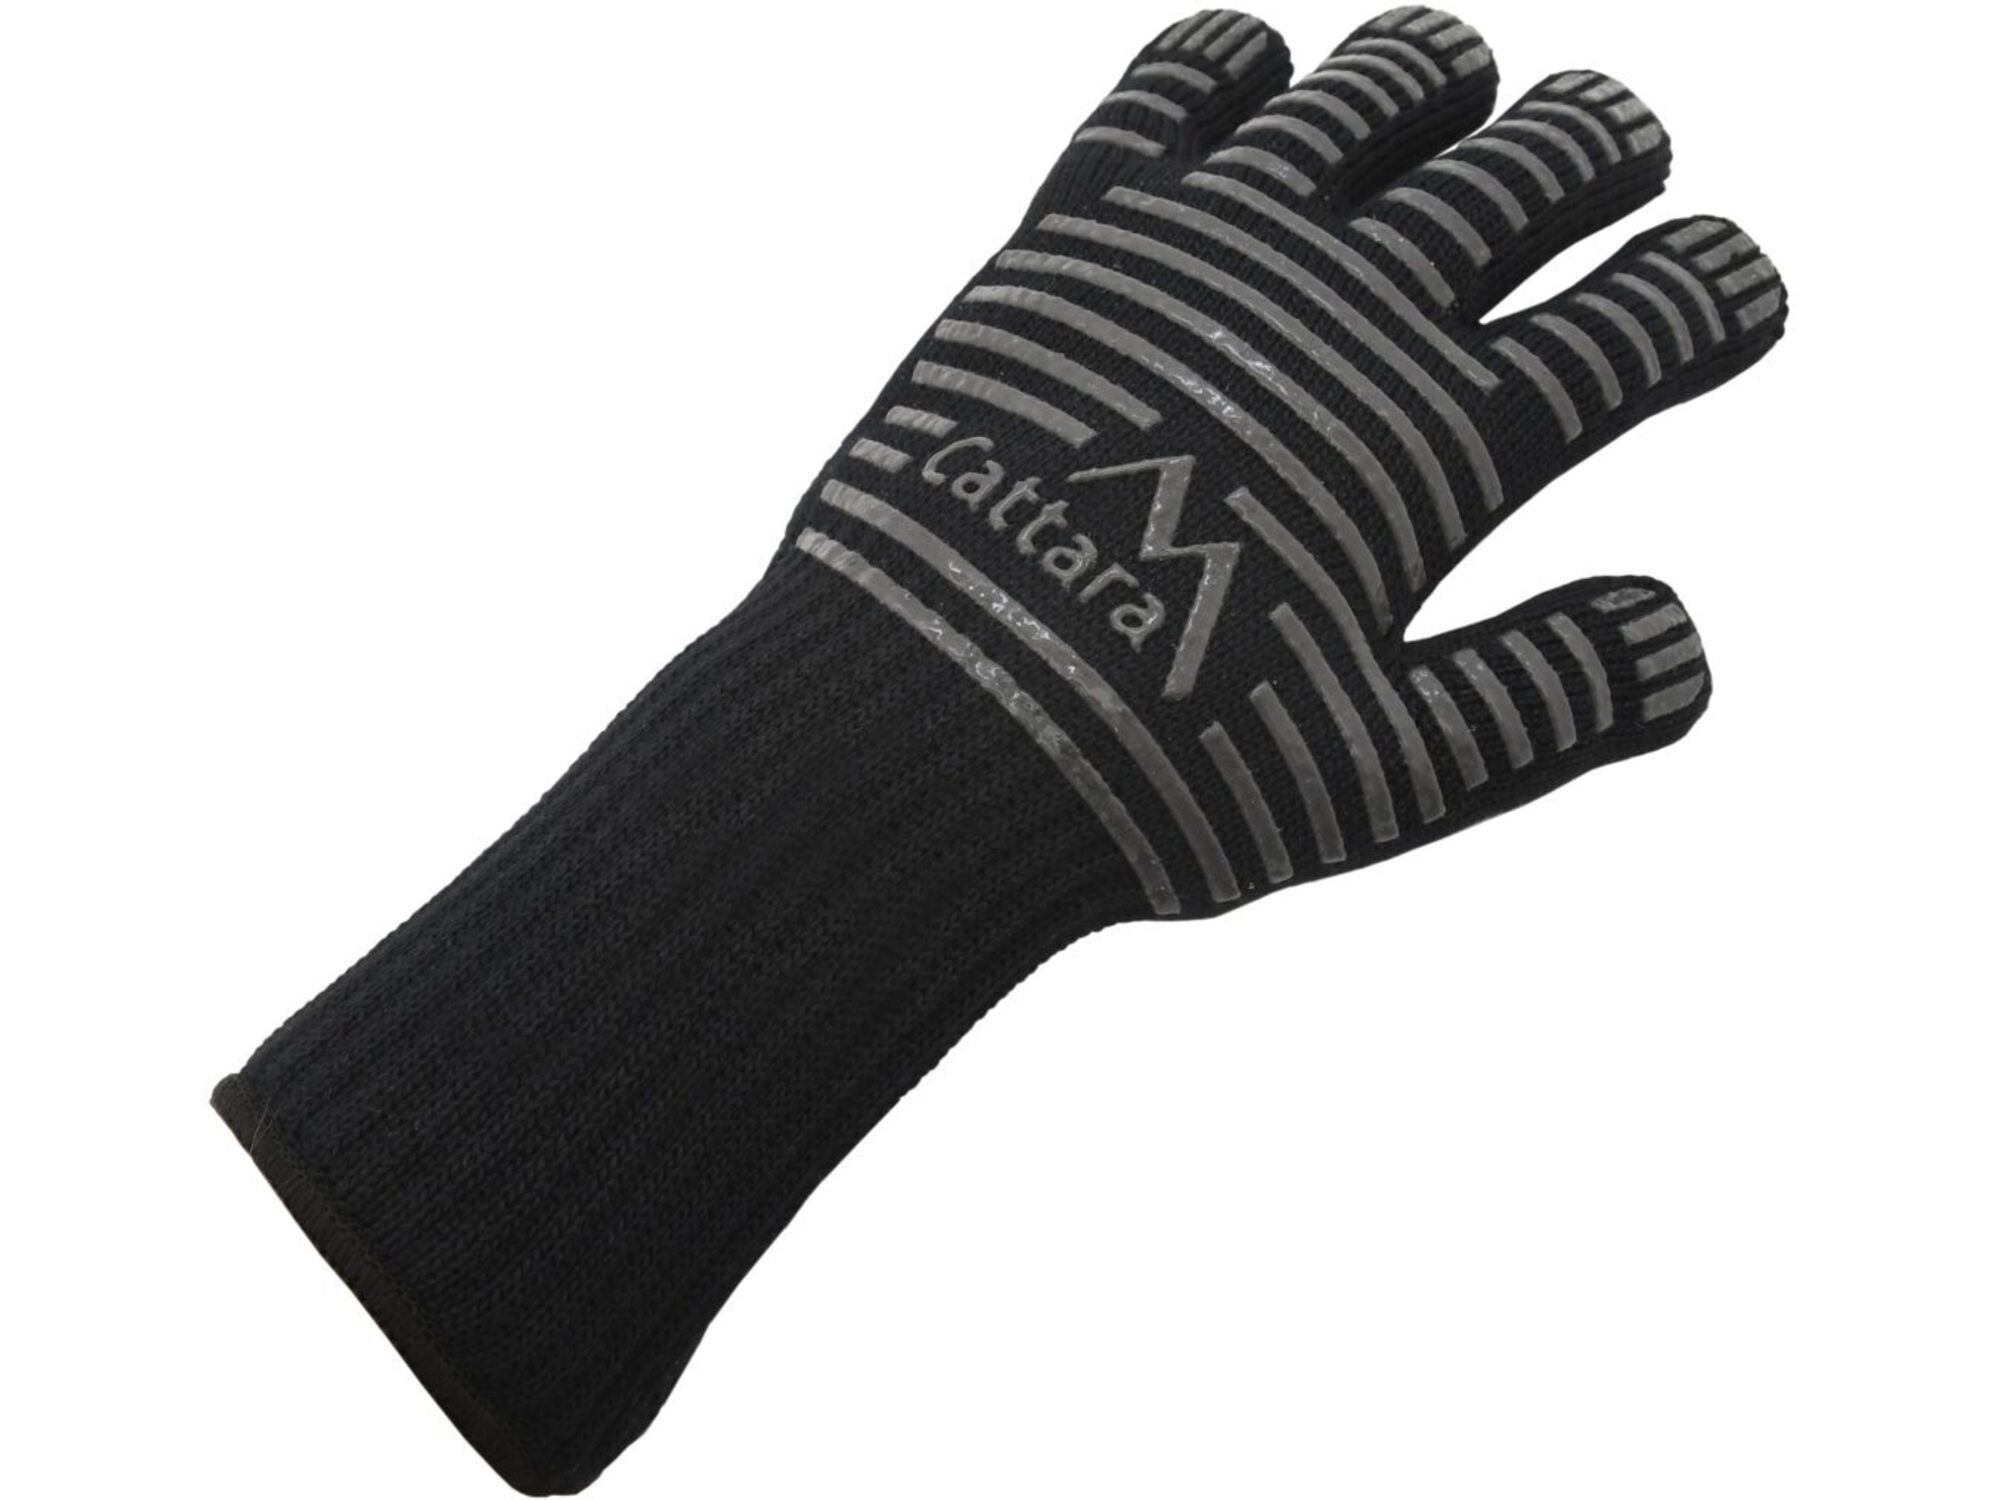 CATTARA rokavica za žar HEAT GRIP, do 350 °C